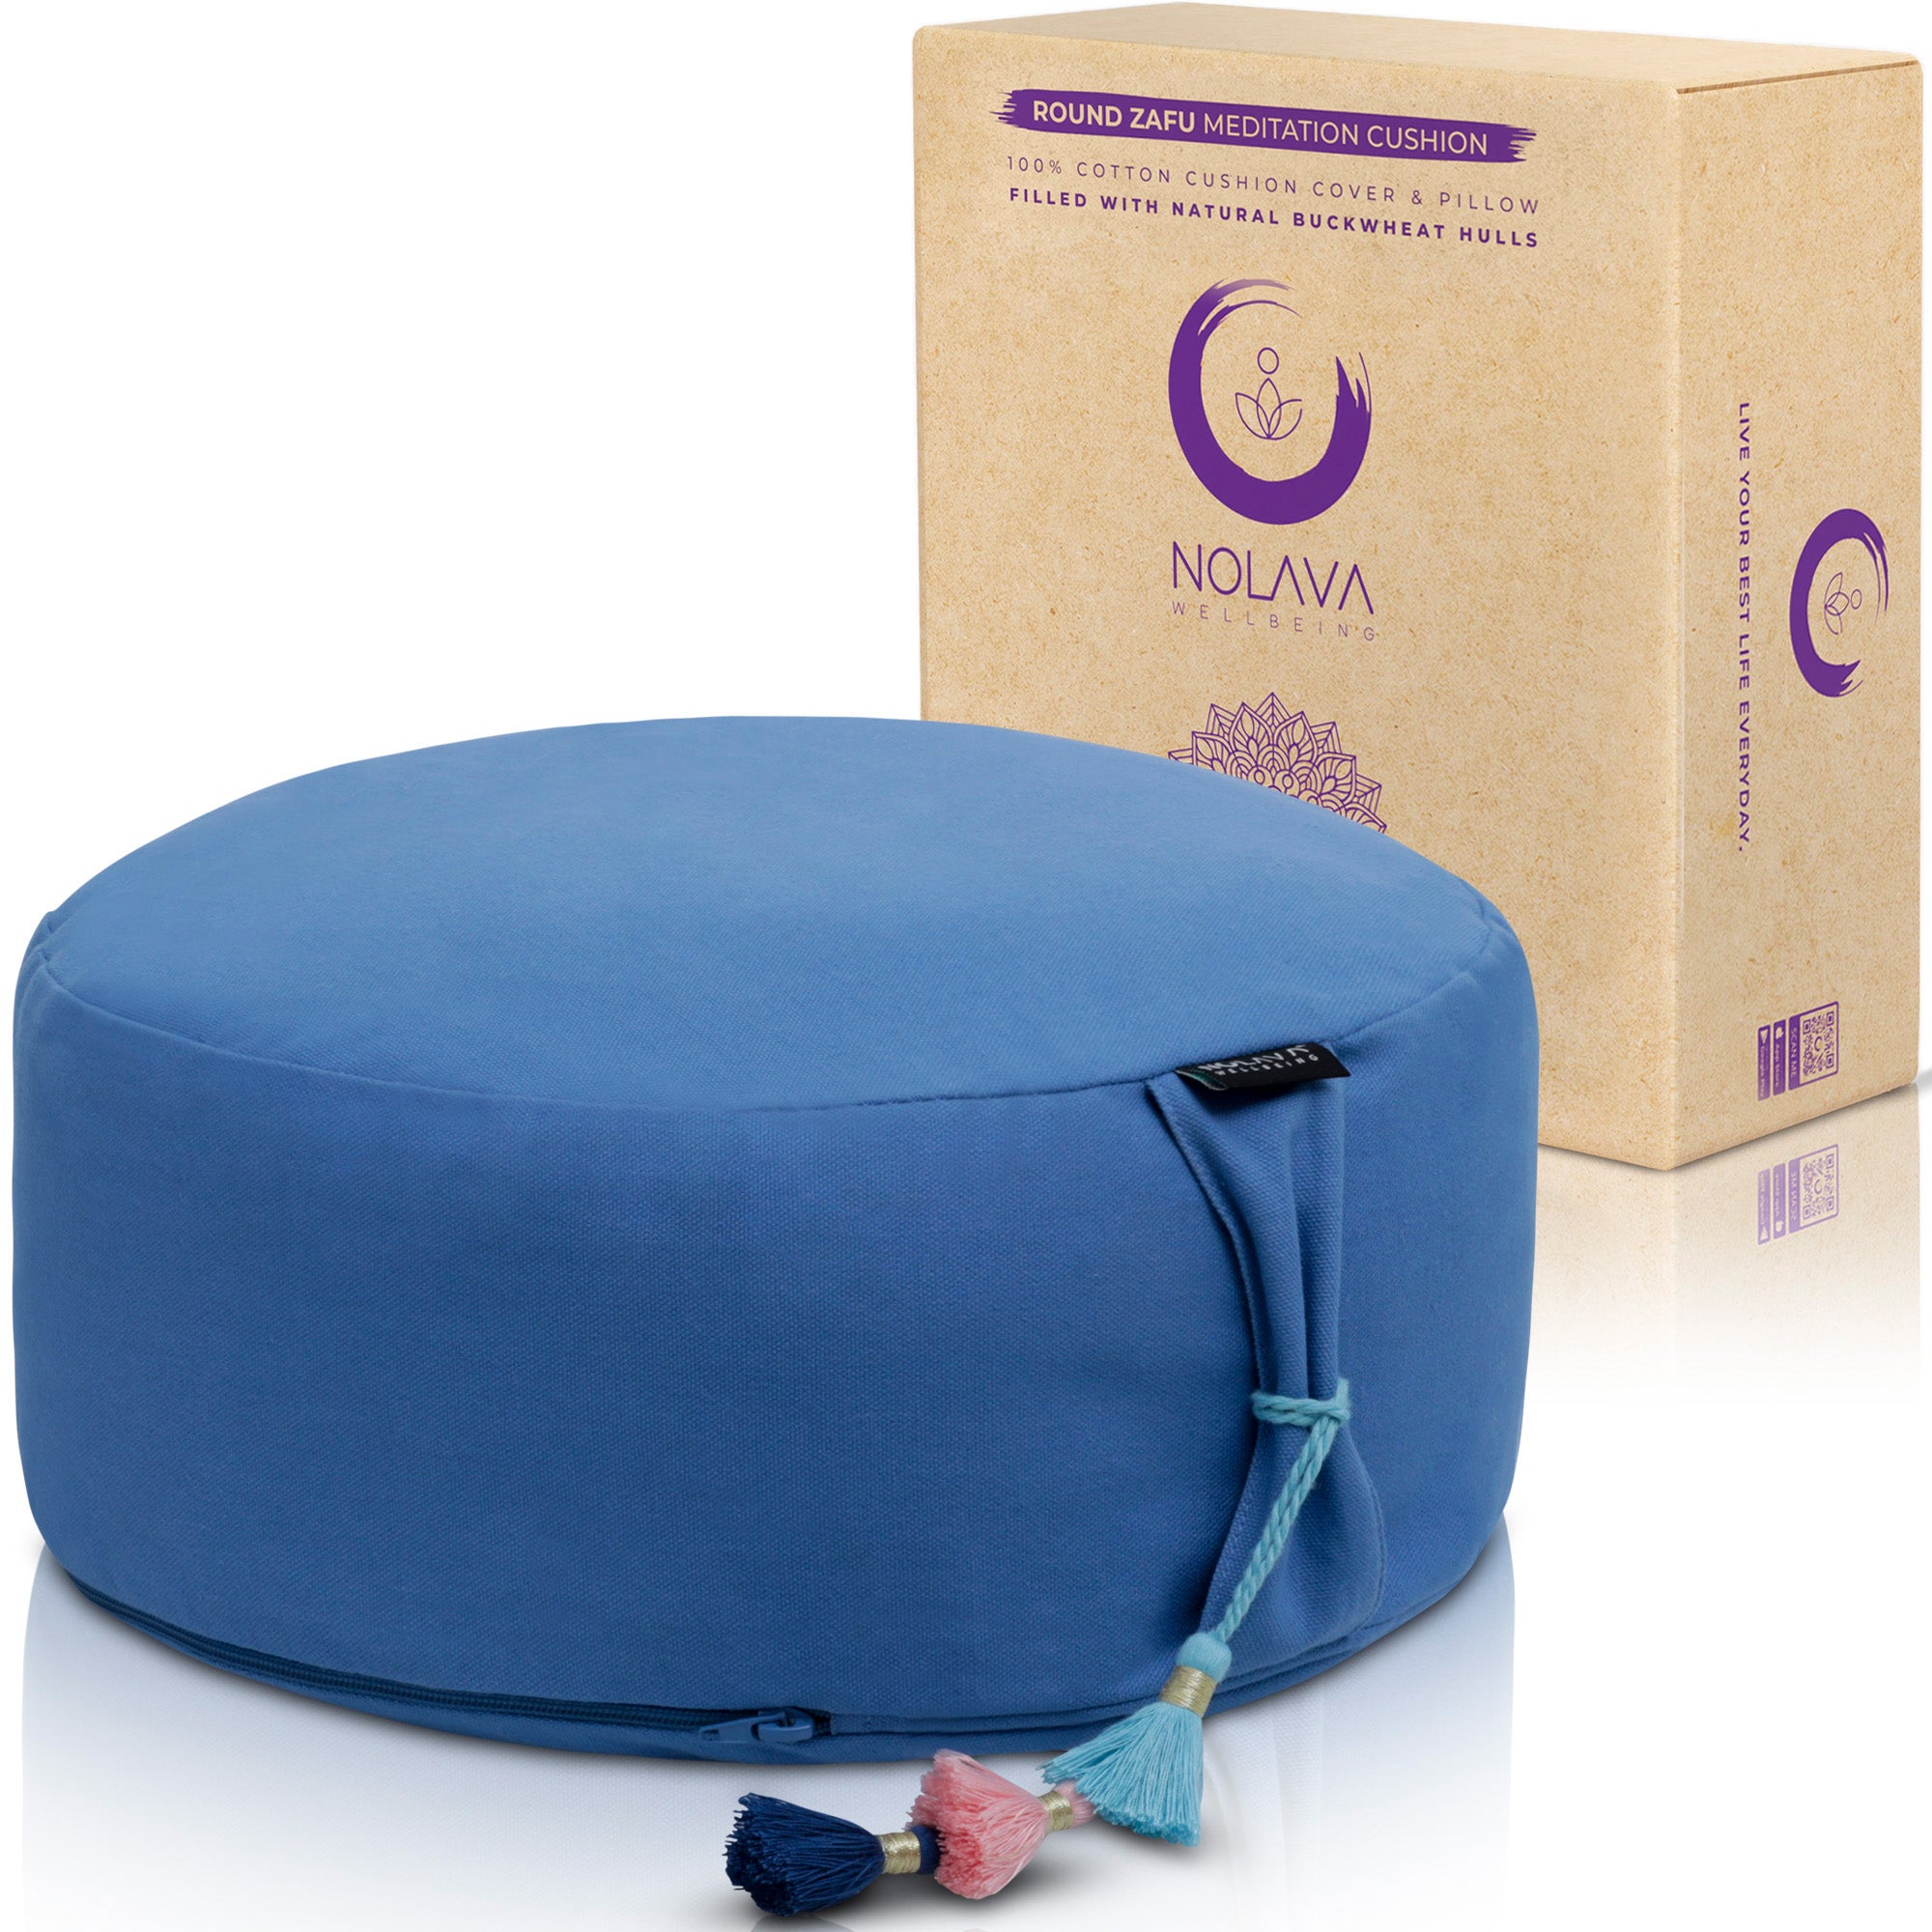 Total Body Care Set  Dry Body Brush Gift Pack – Nolava Designs